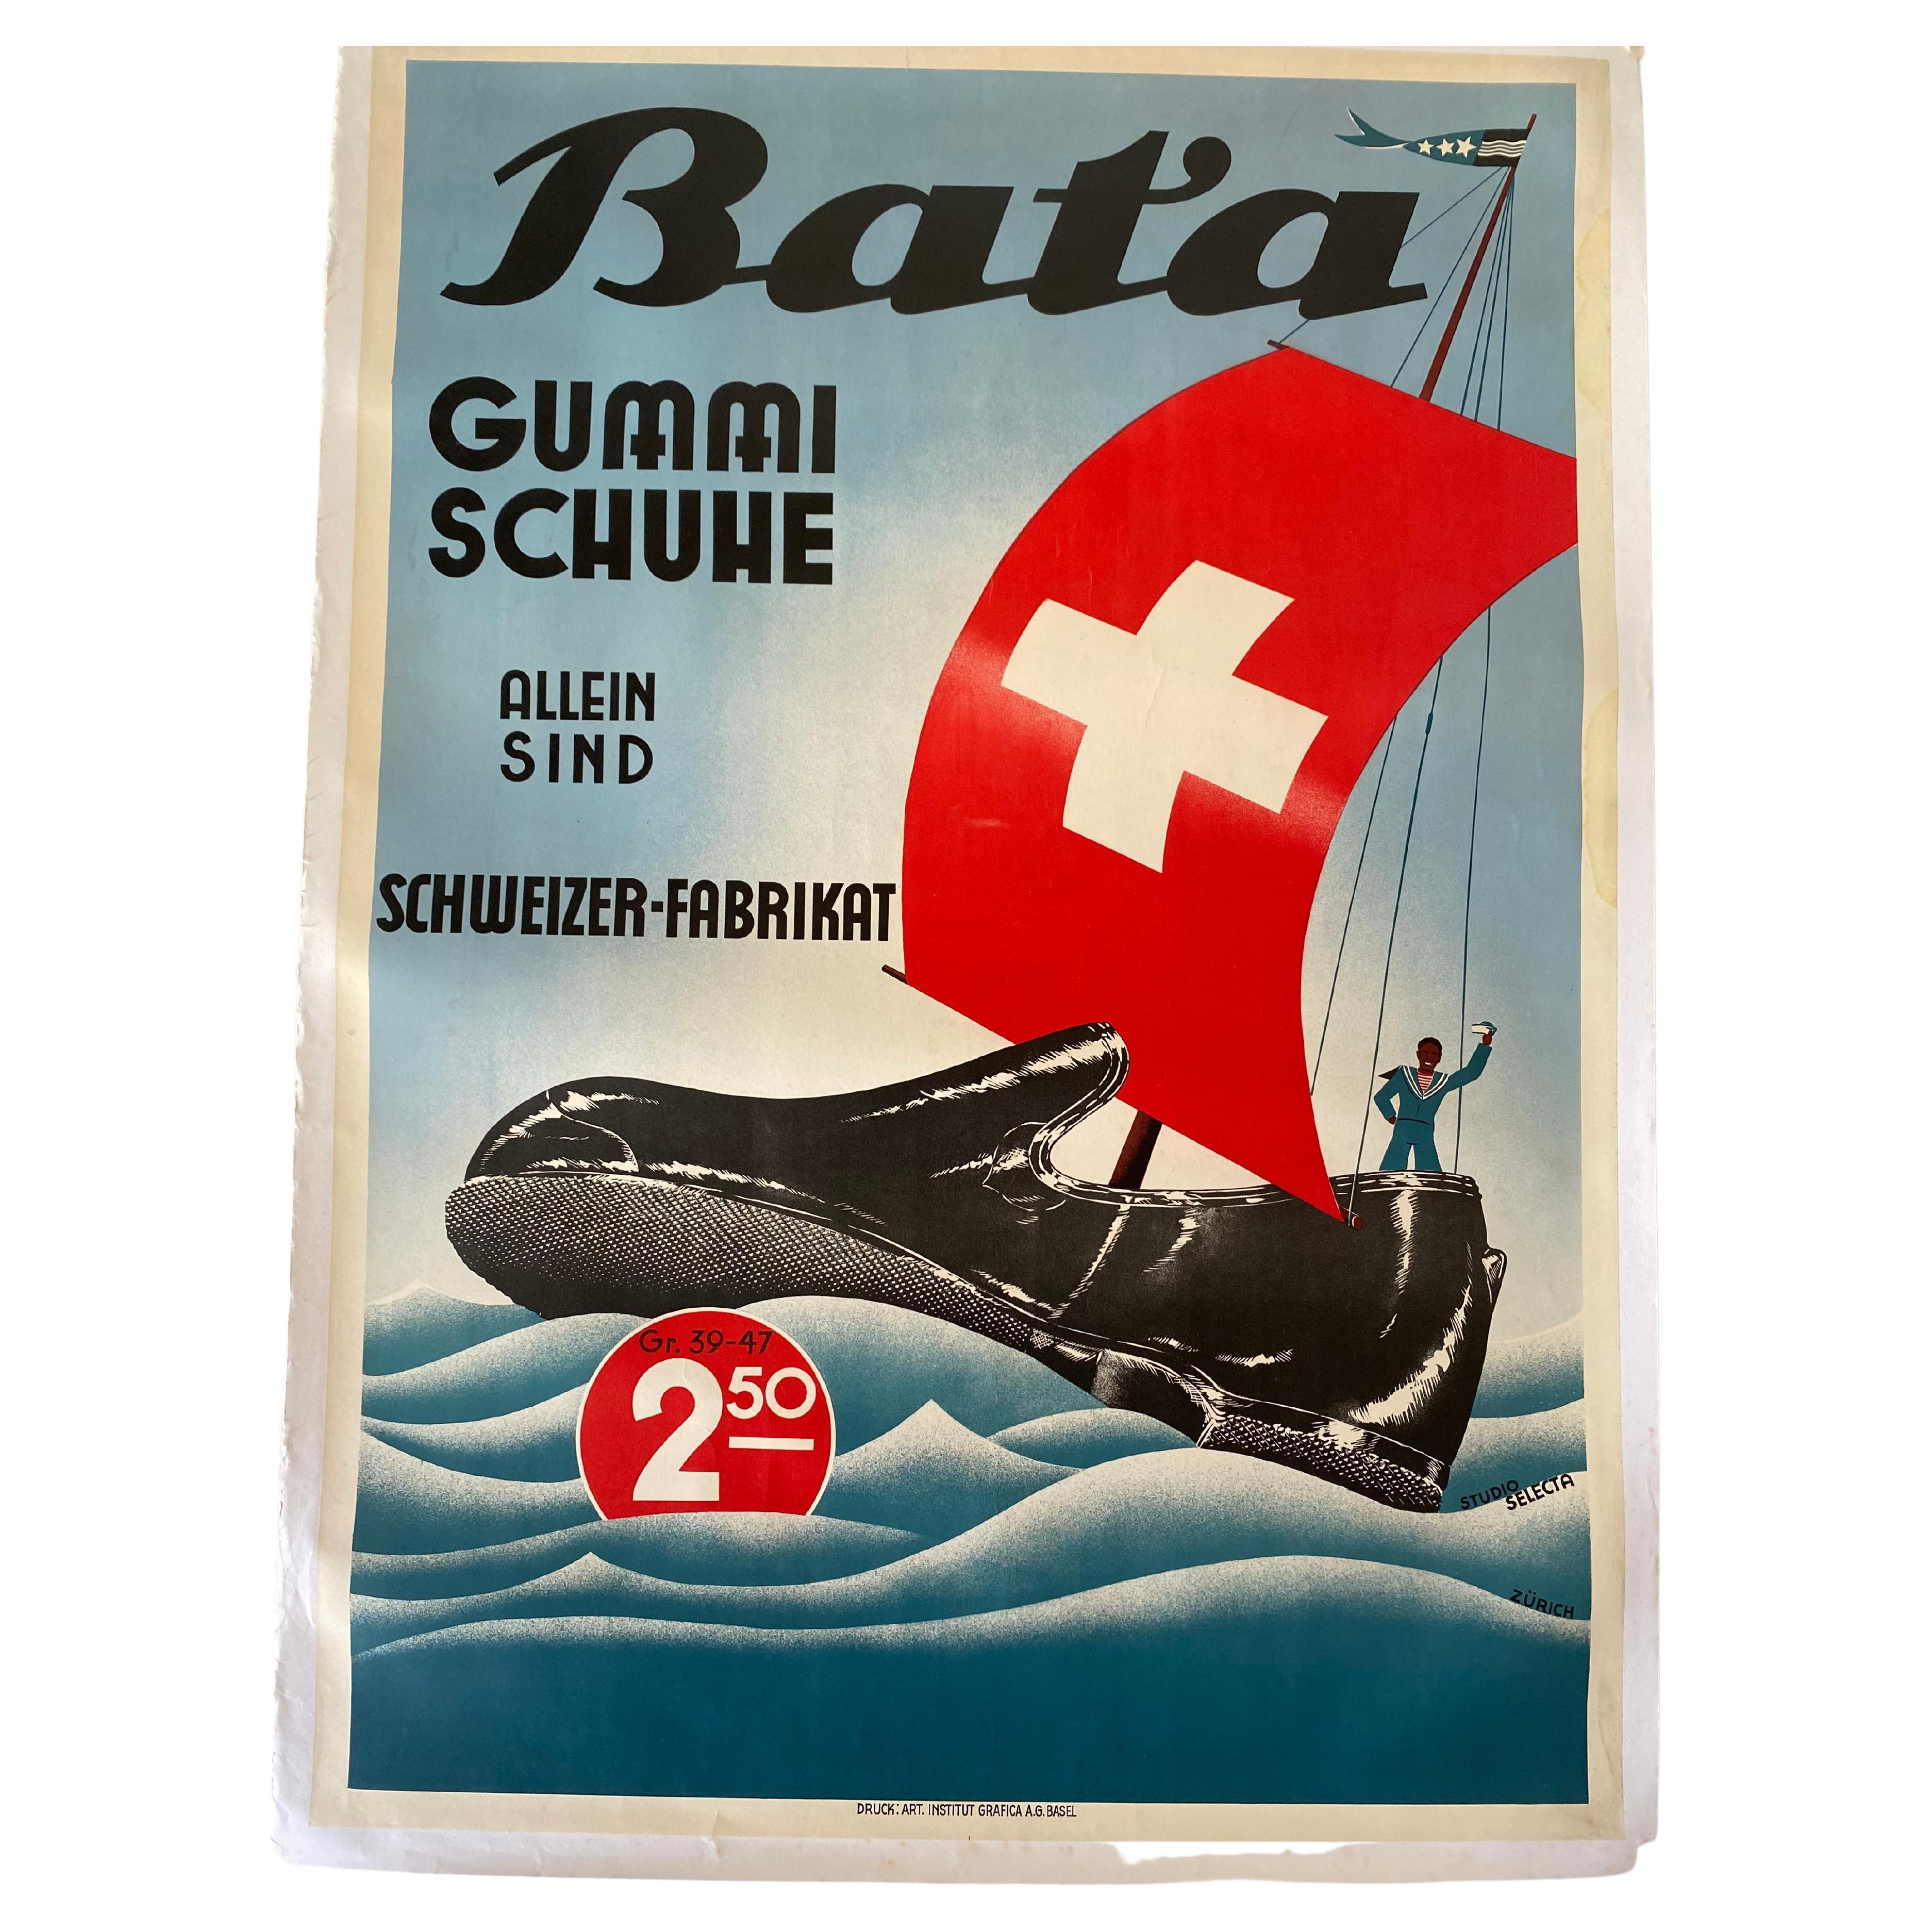 Original Vintage "Bata shoes company" wall poster, Switzerland, 1950s